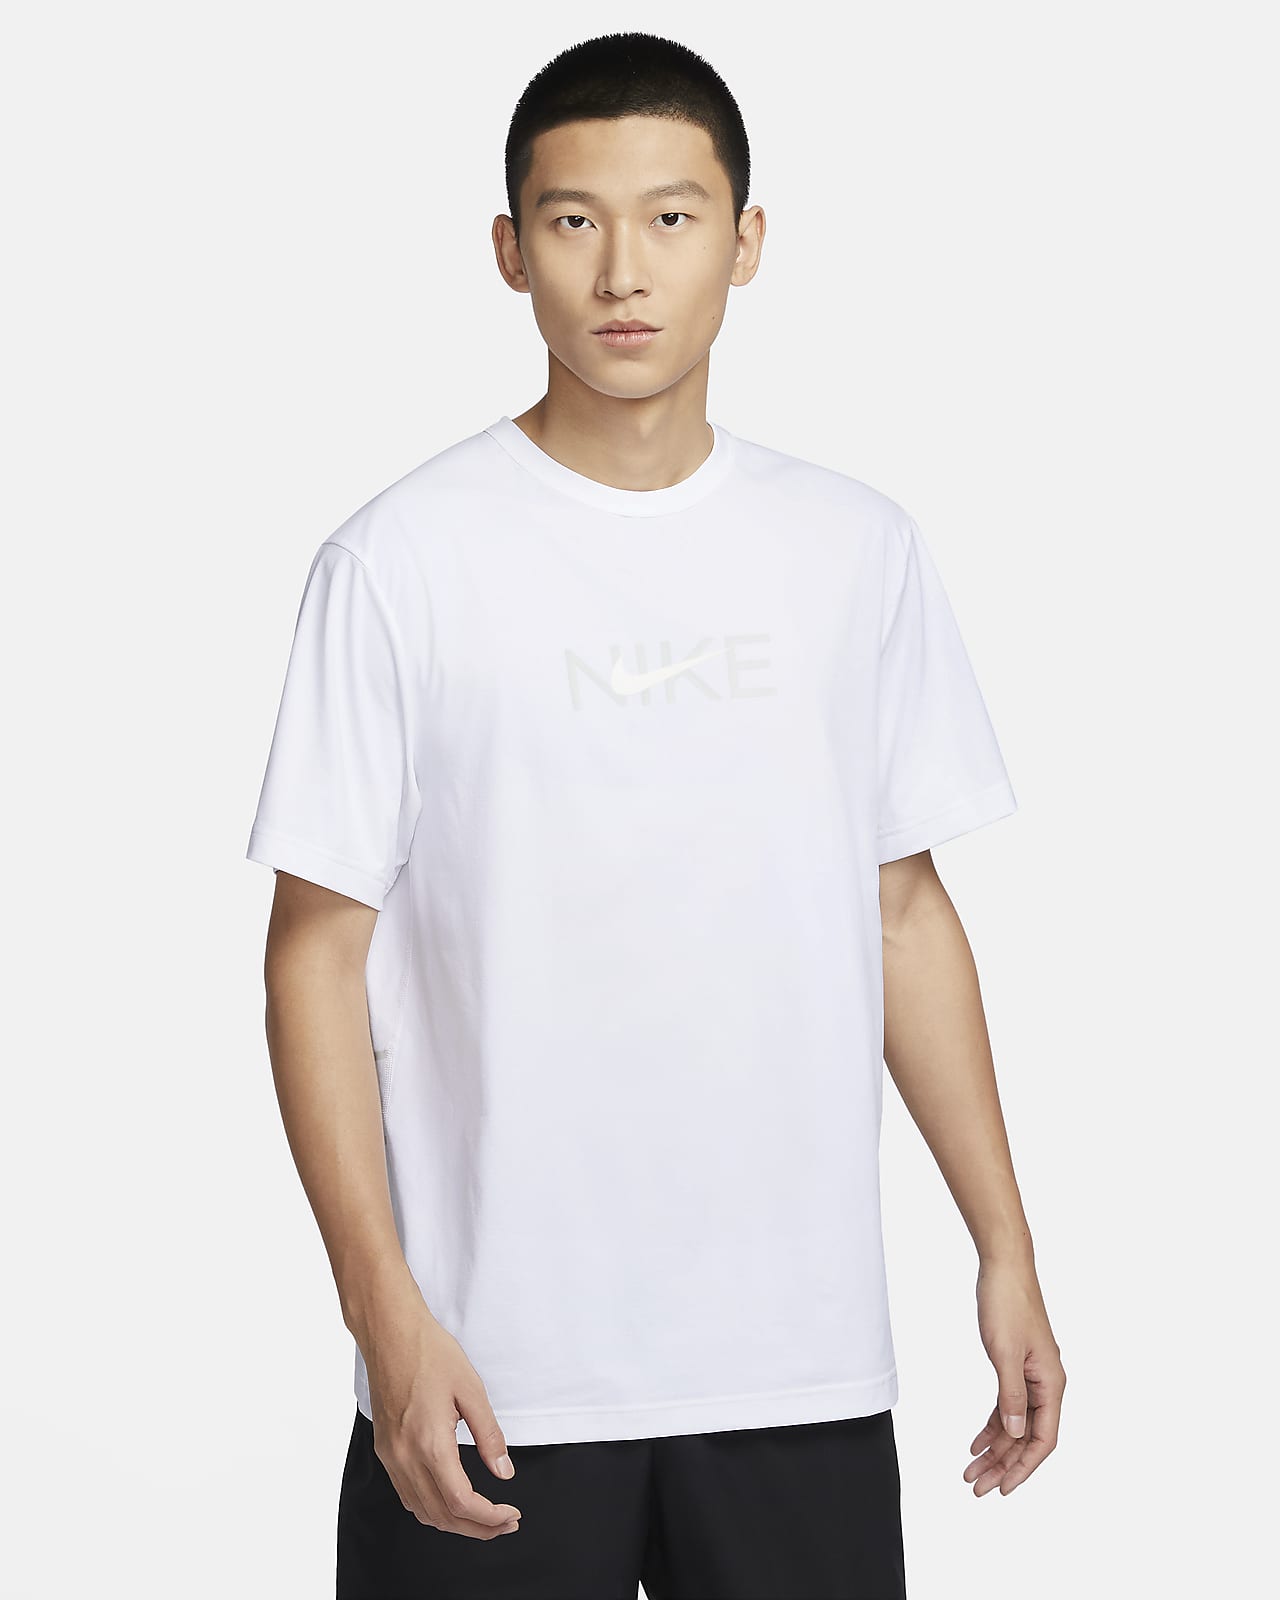 Nike Hyverse 男款 Dri-FIT 防紫外線短袖健身上衣